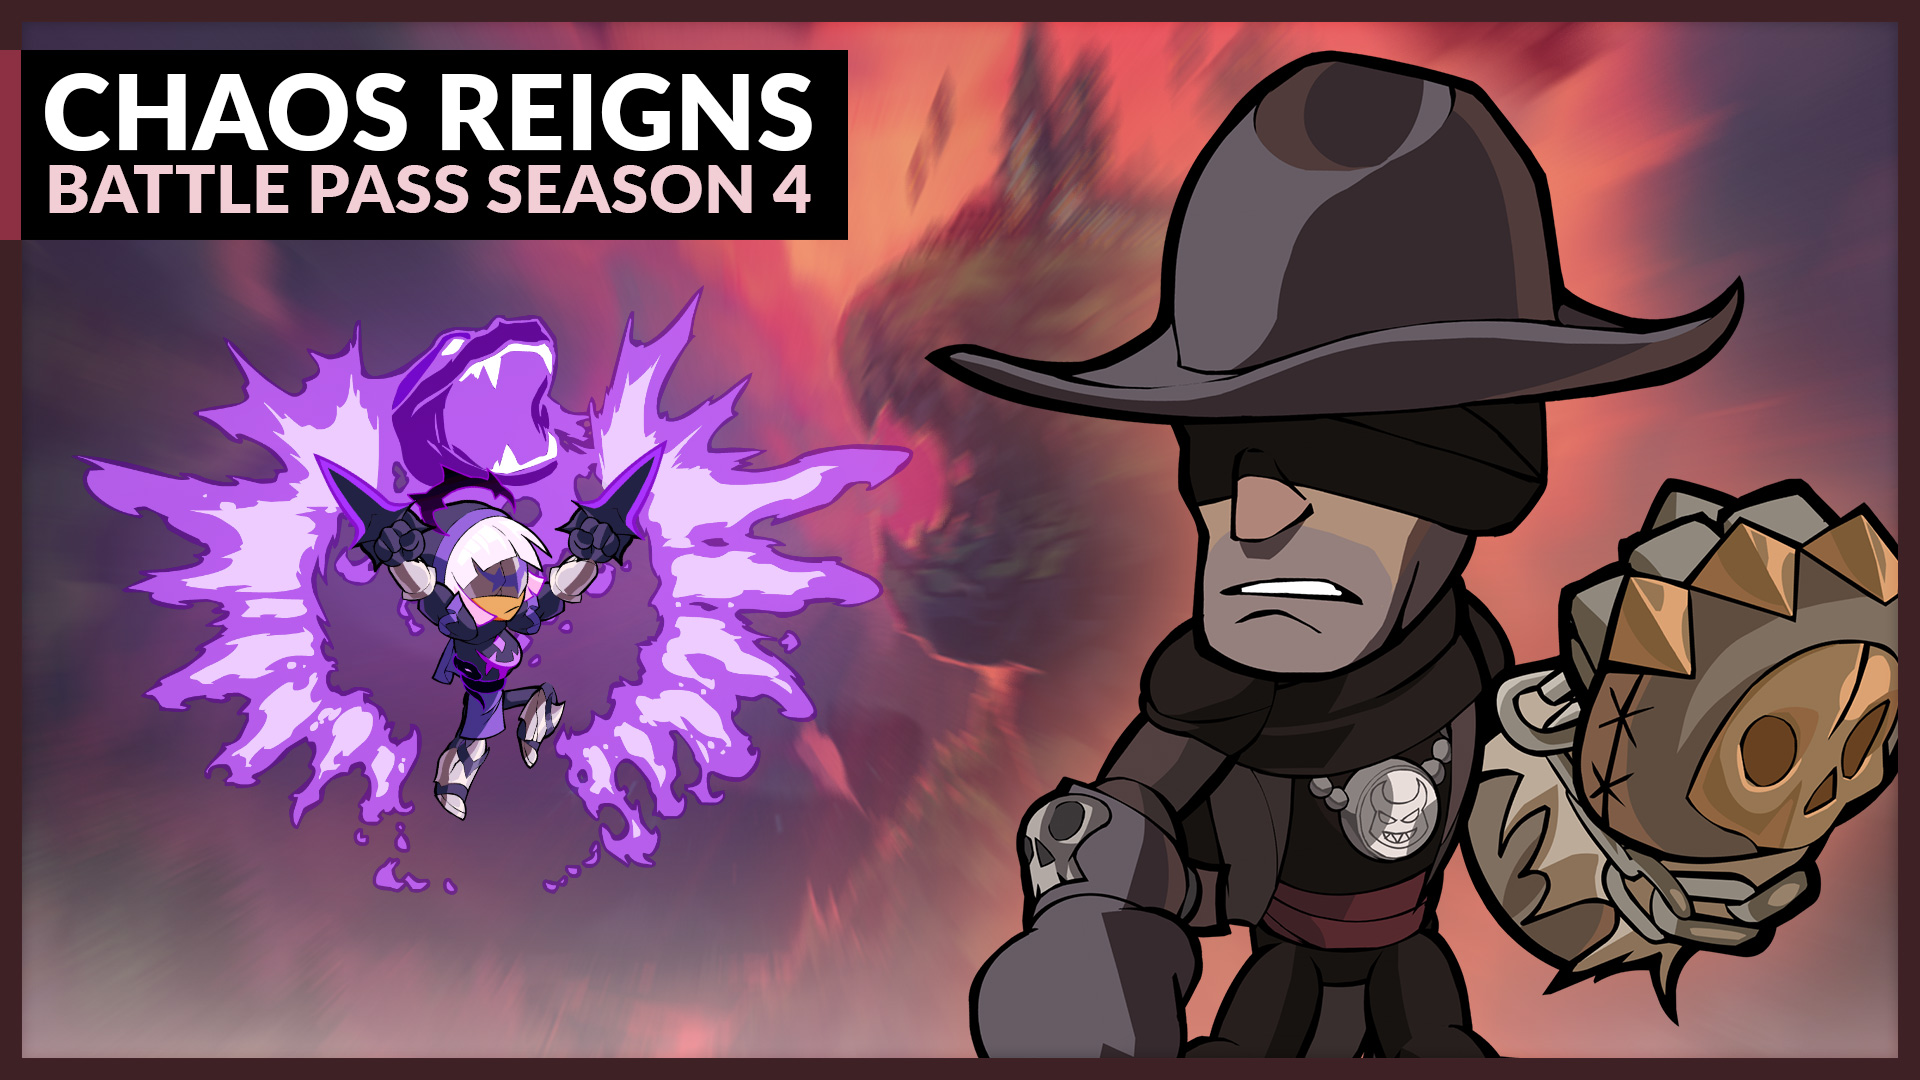 Chaos Reigns in Battle Pass Season 4